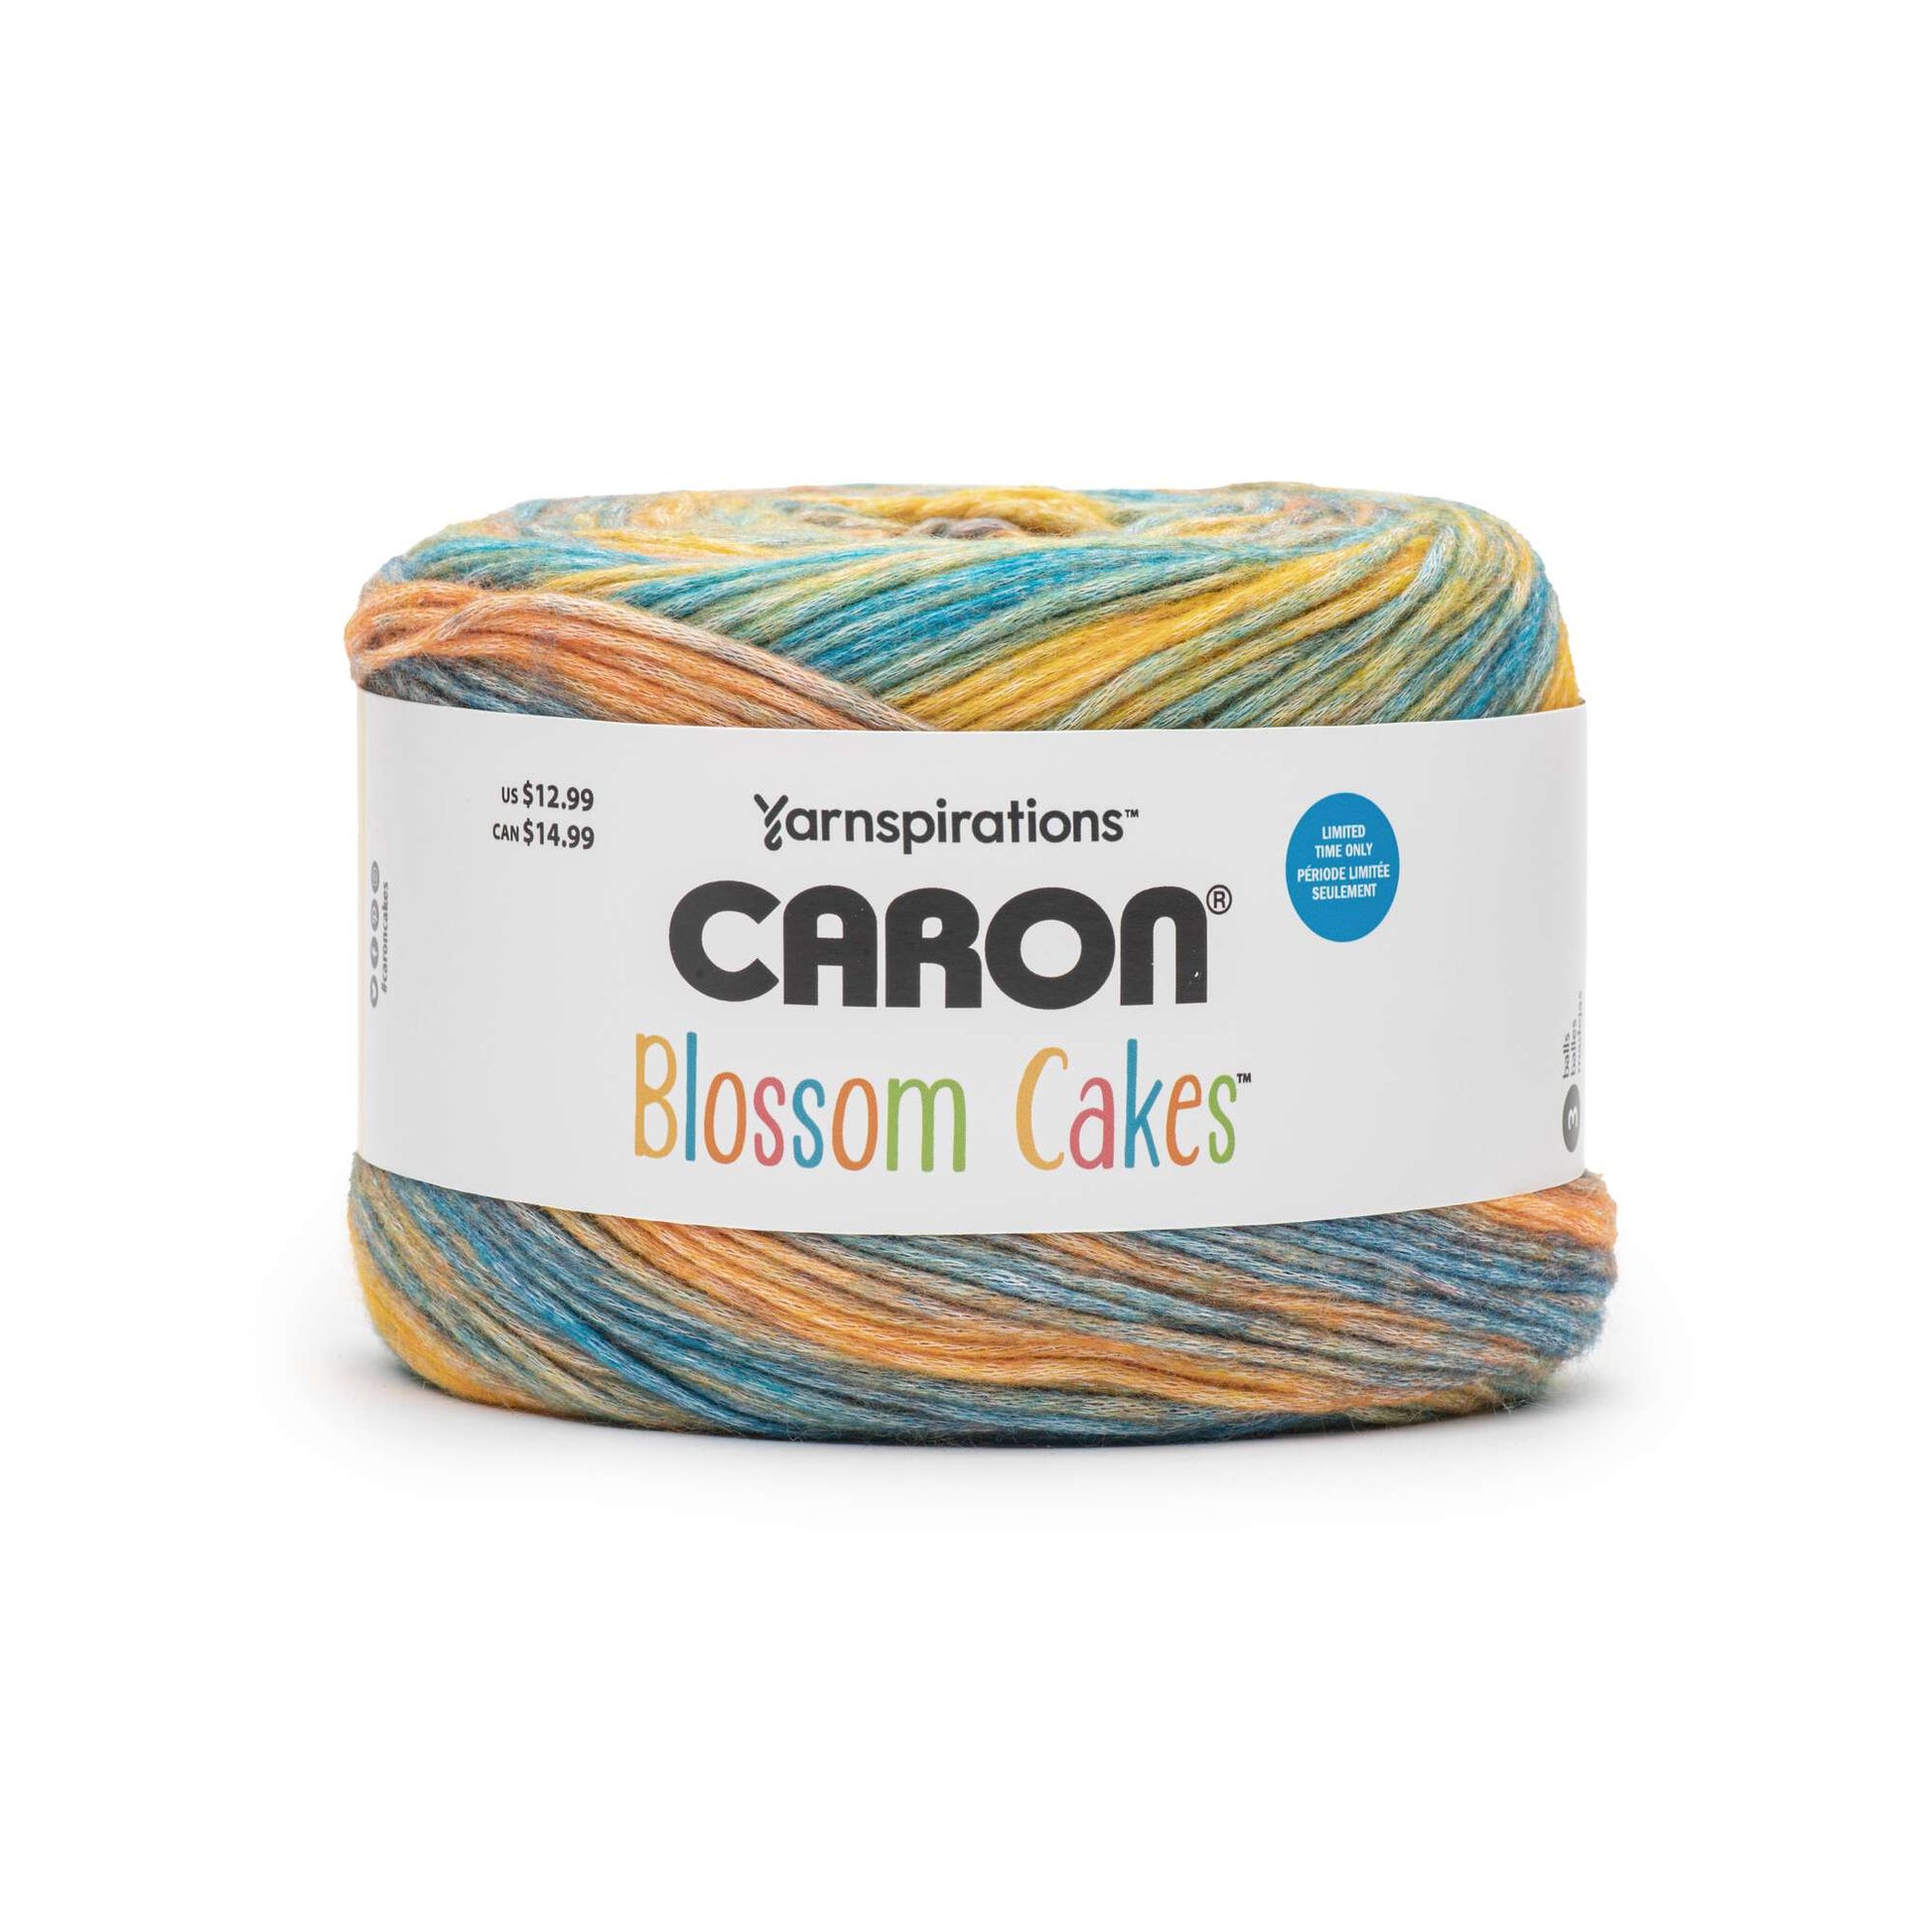 Caron Blossom Cakes Yarn, Retailer Exclusive